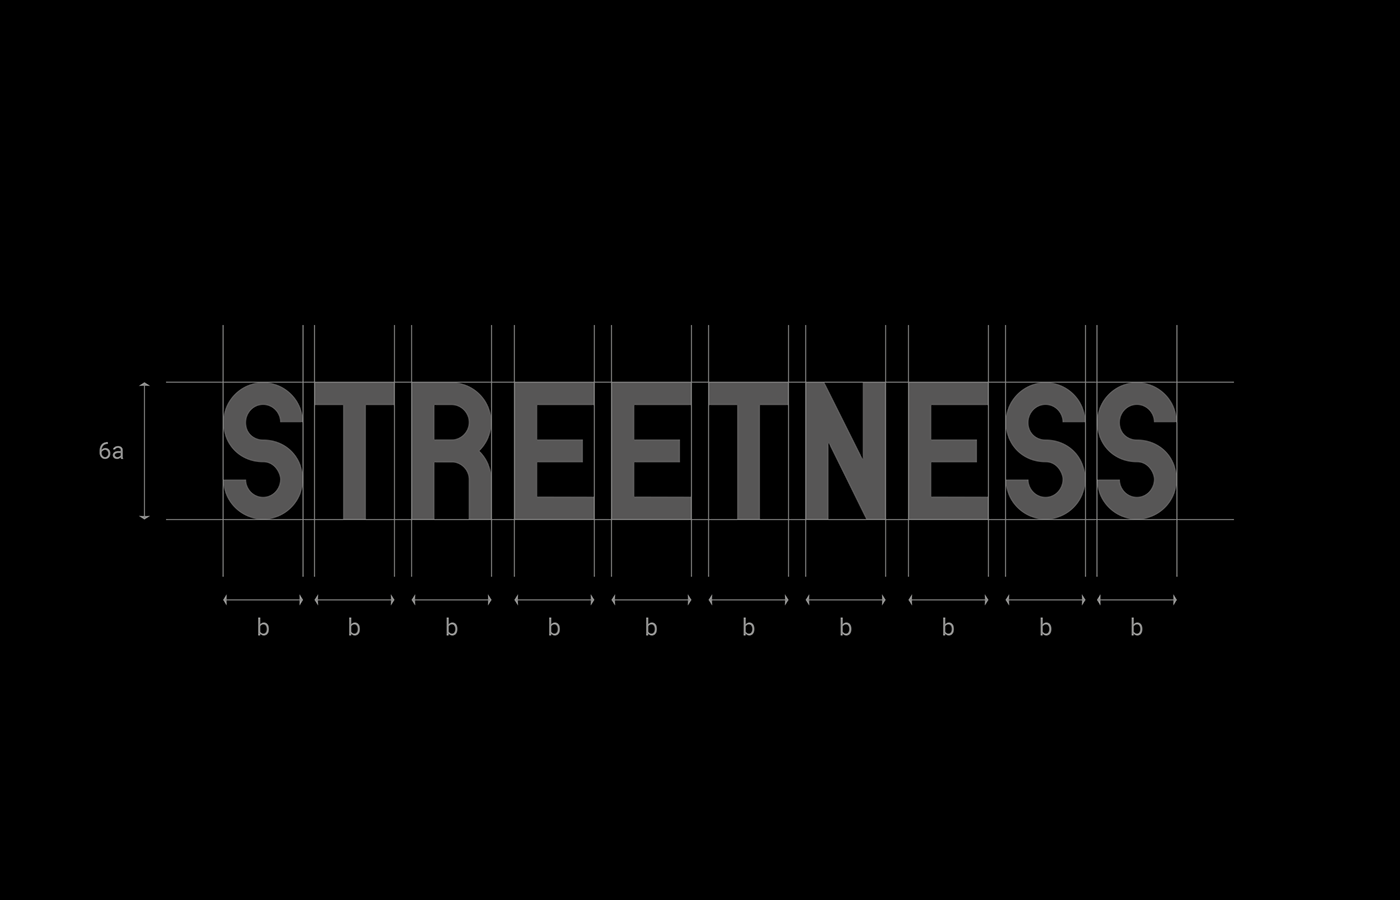 logo Logotype branding  streetwear Street shop streetness sign clothes katowice